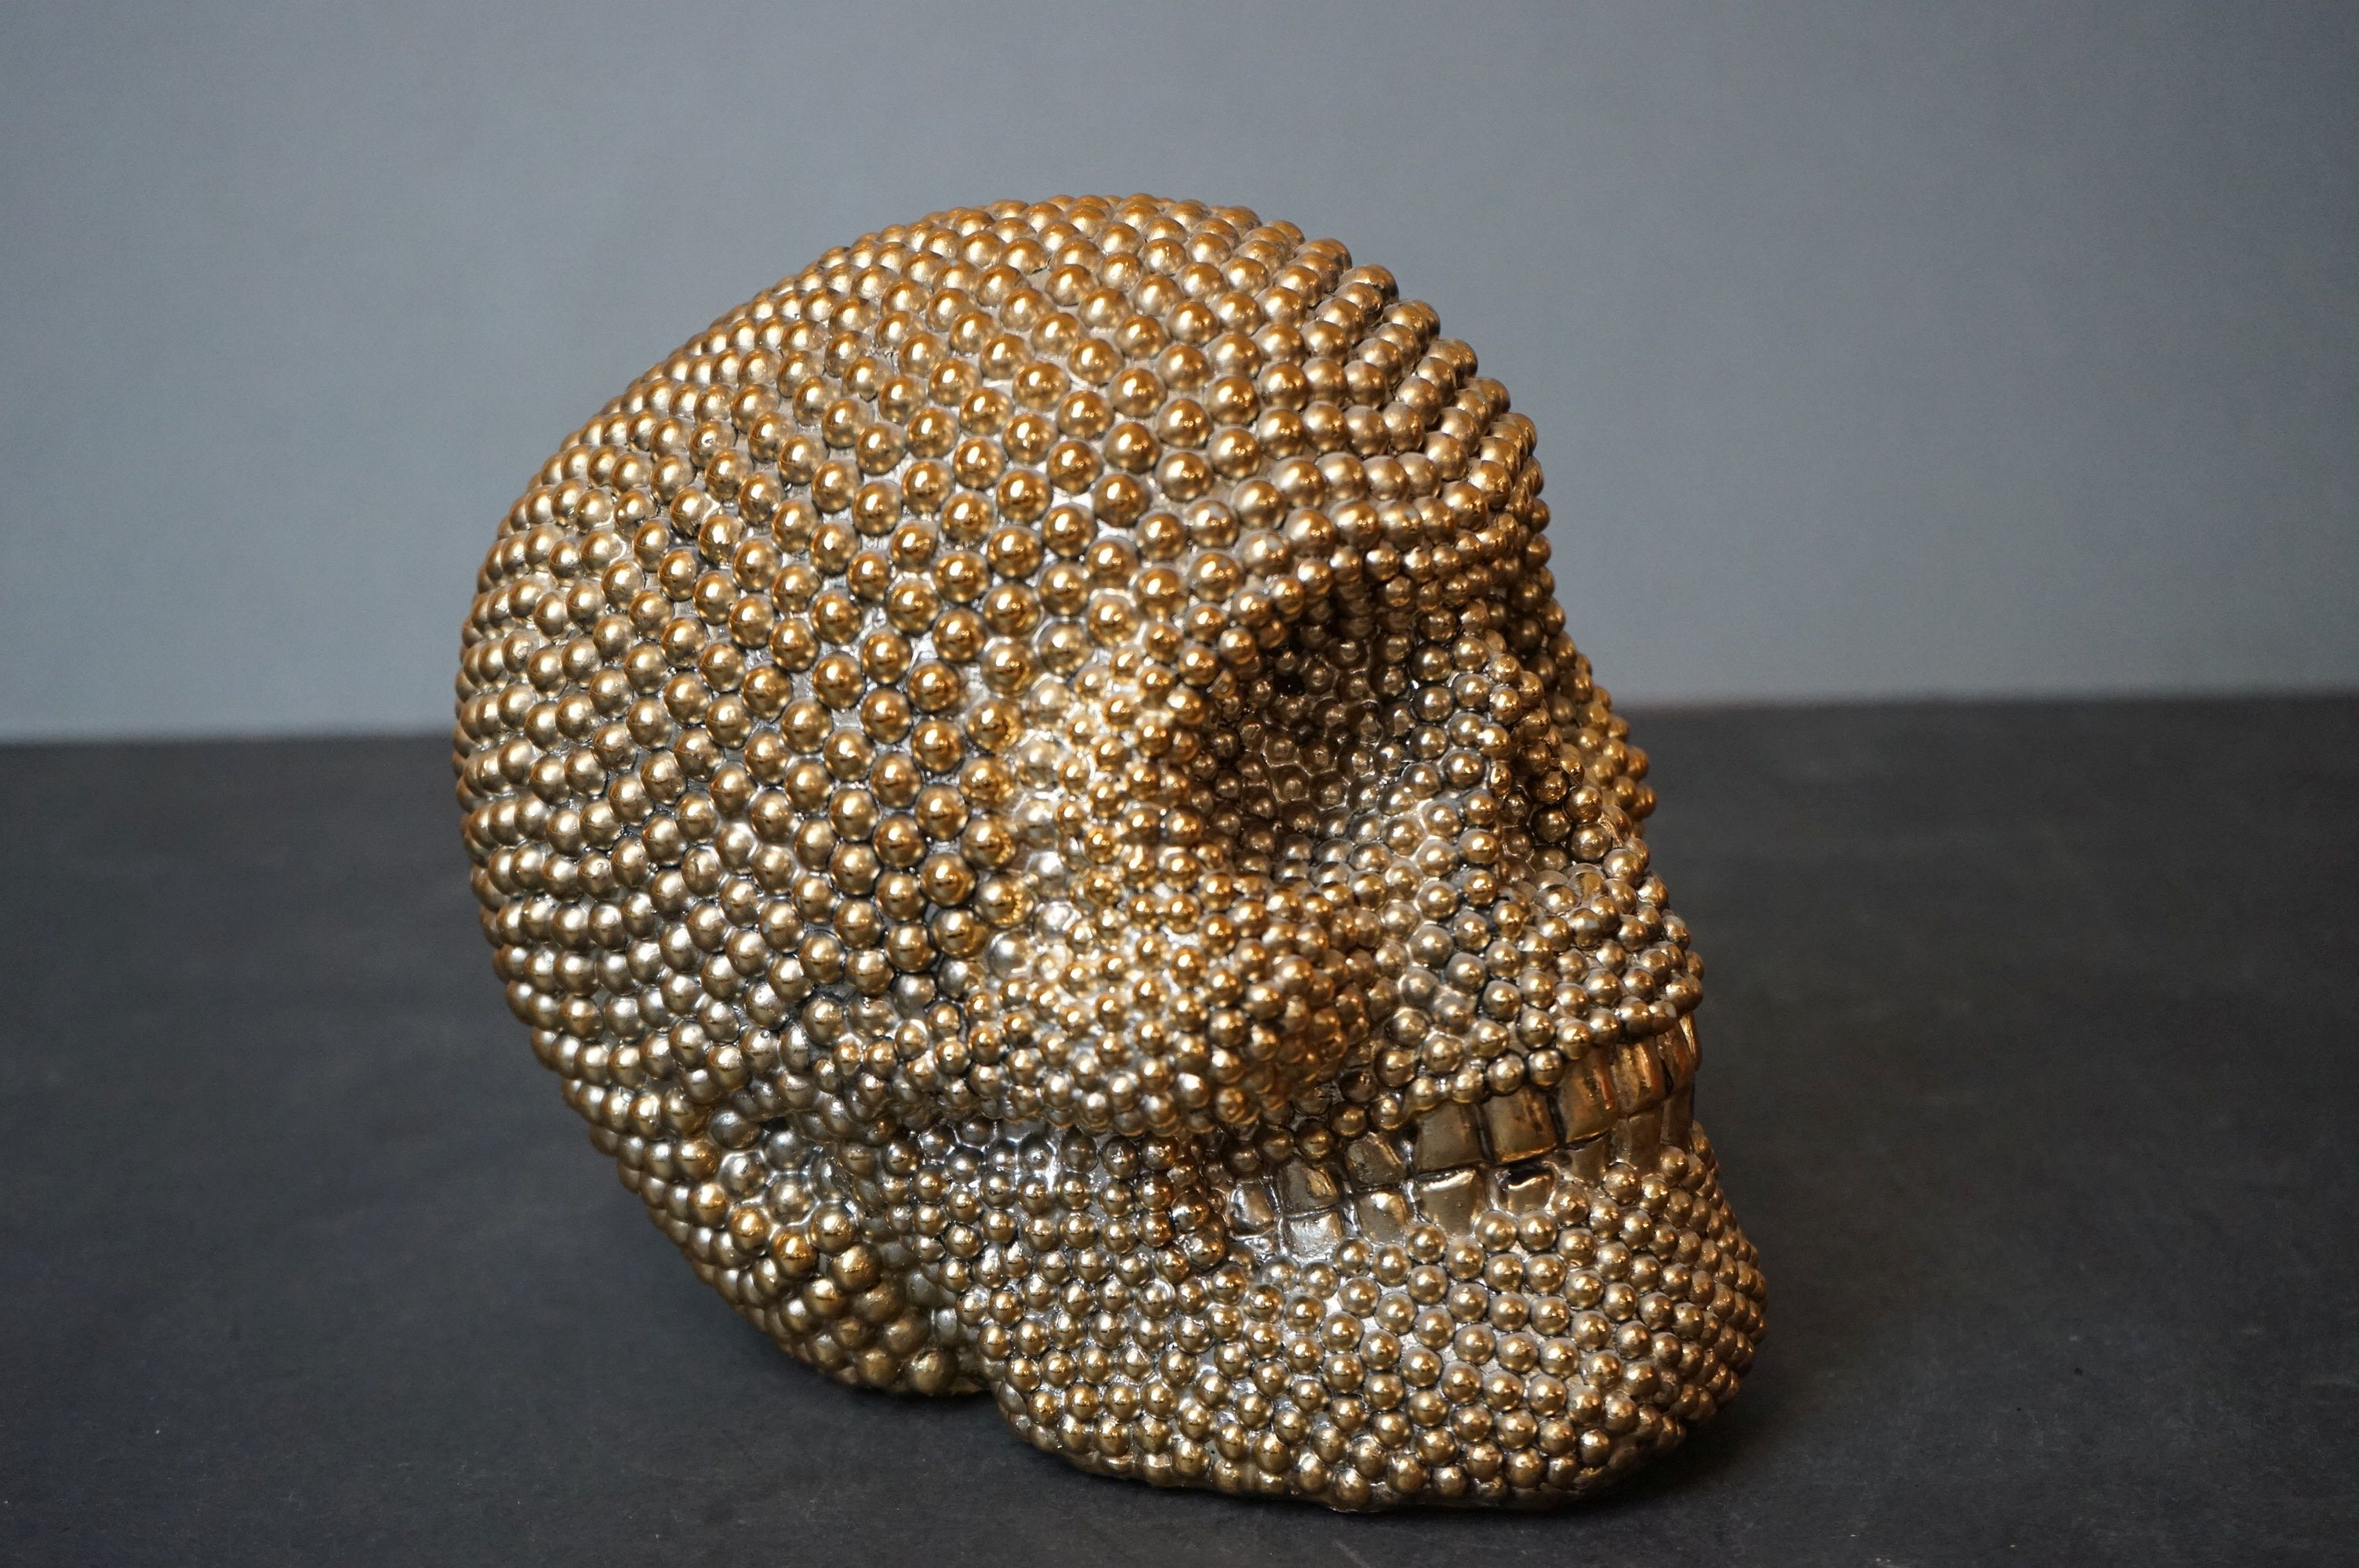 A decorative resin Golden skull ornament. - Image 3 of 4